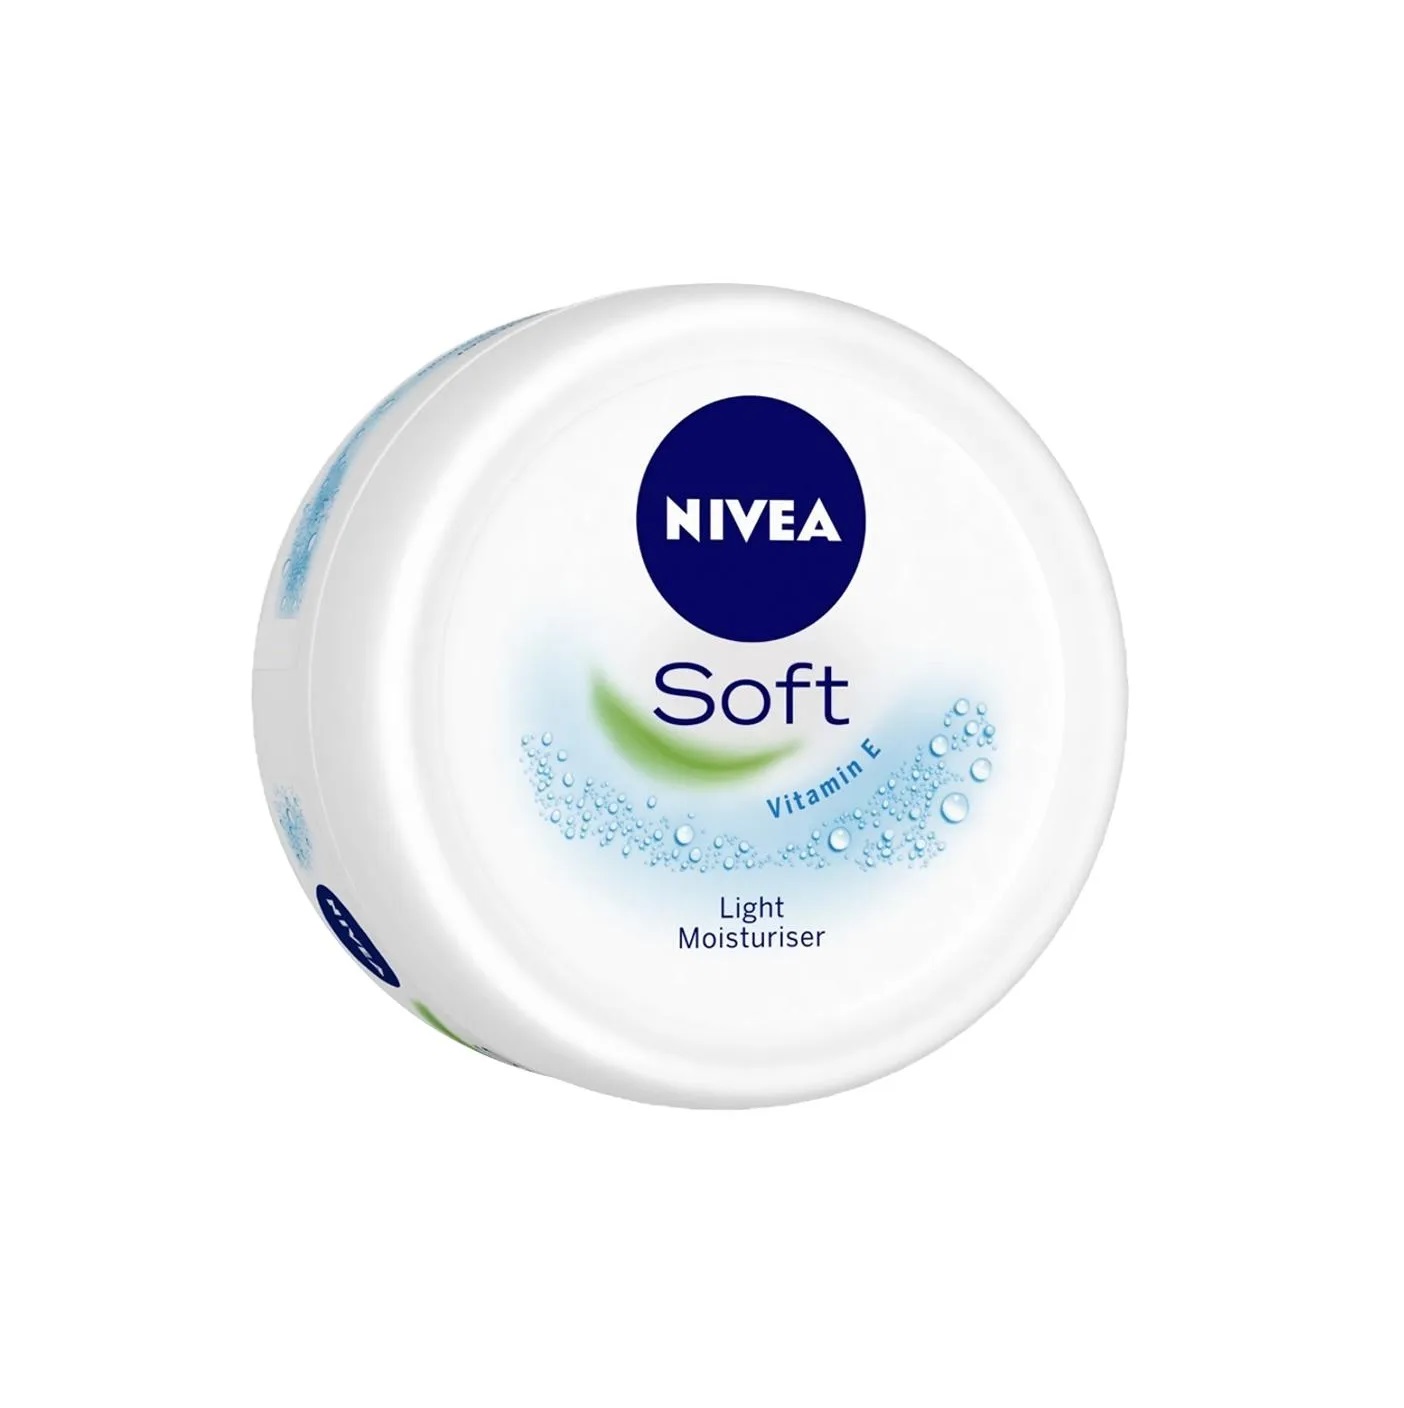 NIVEA Soft Light Moisturiser Cream